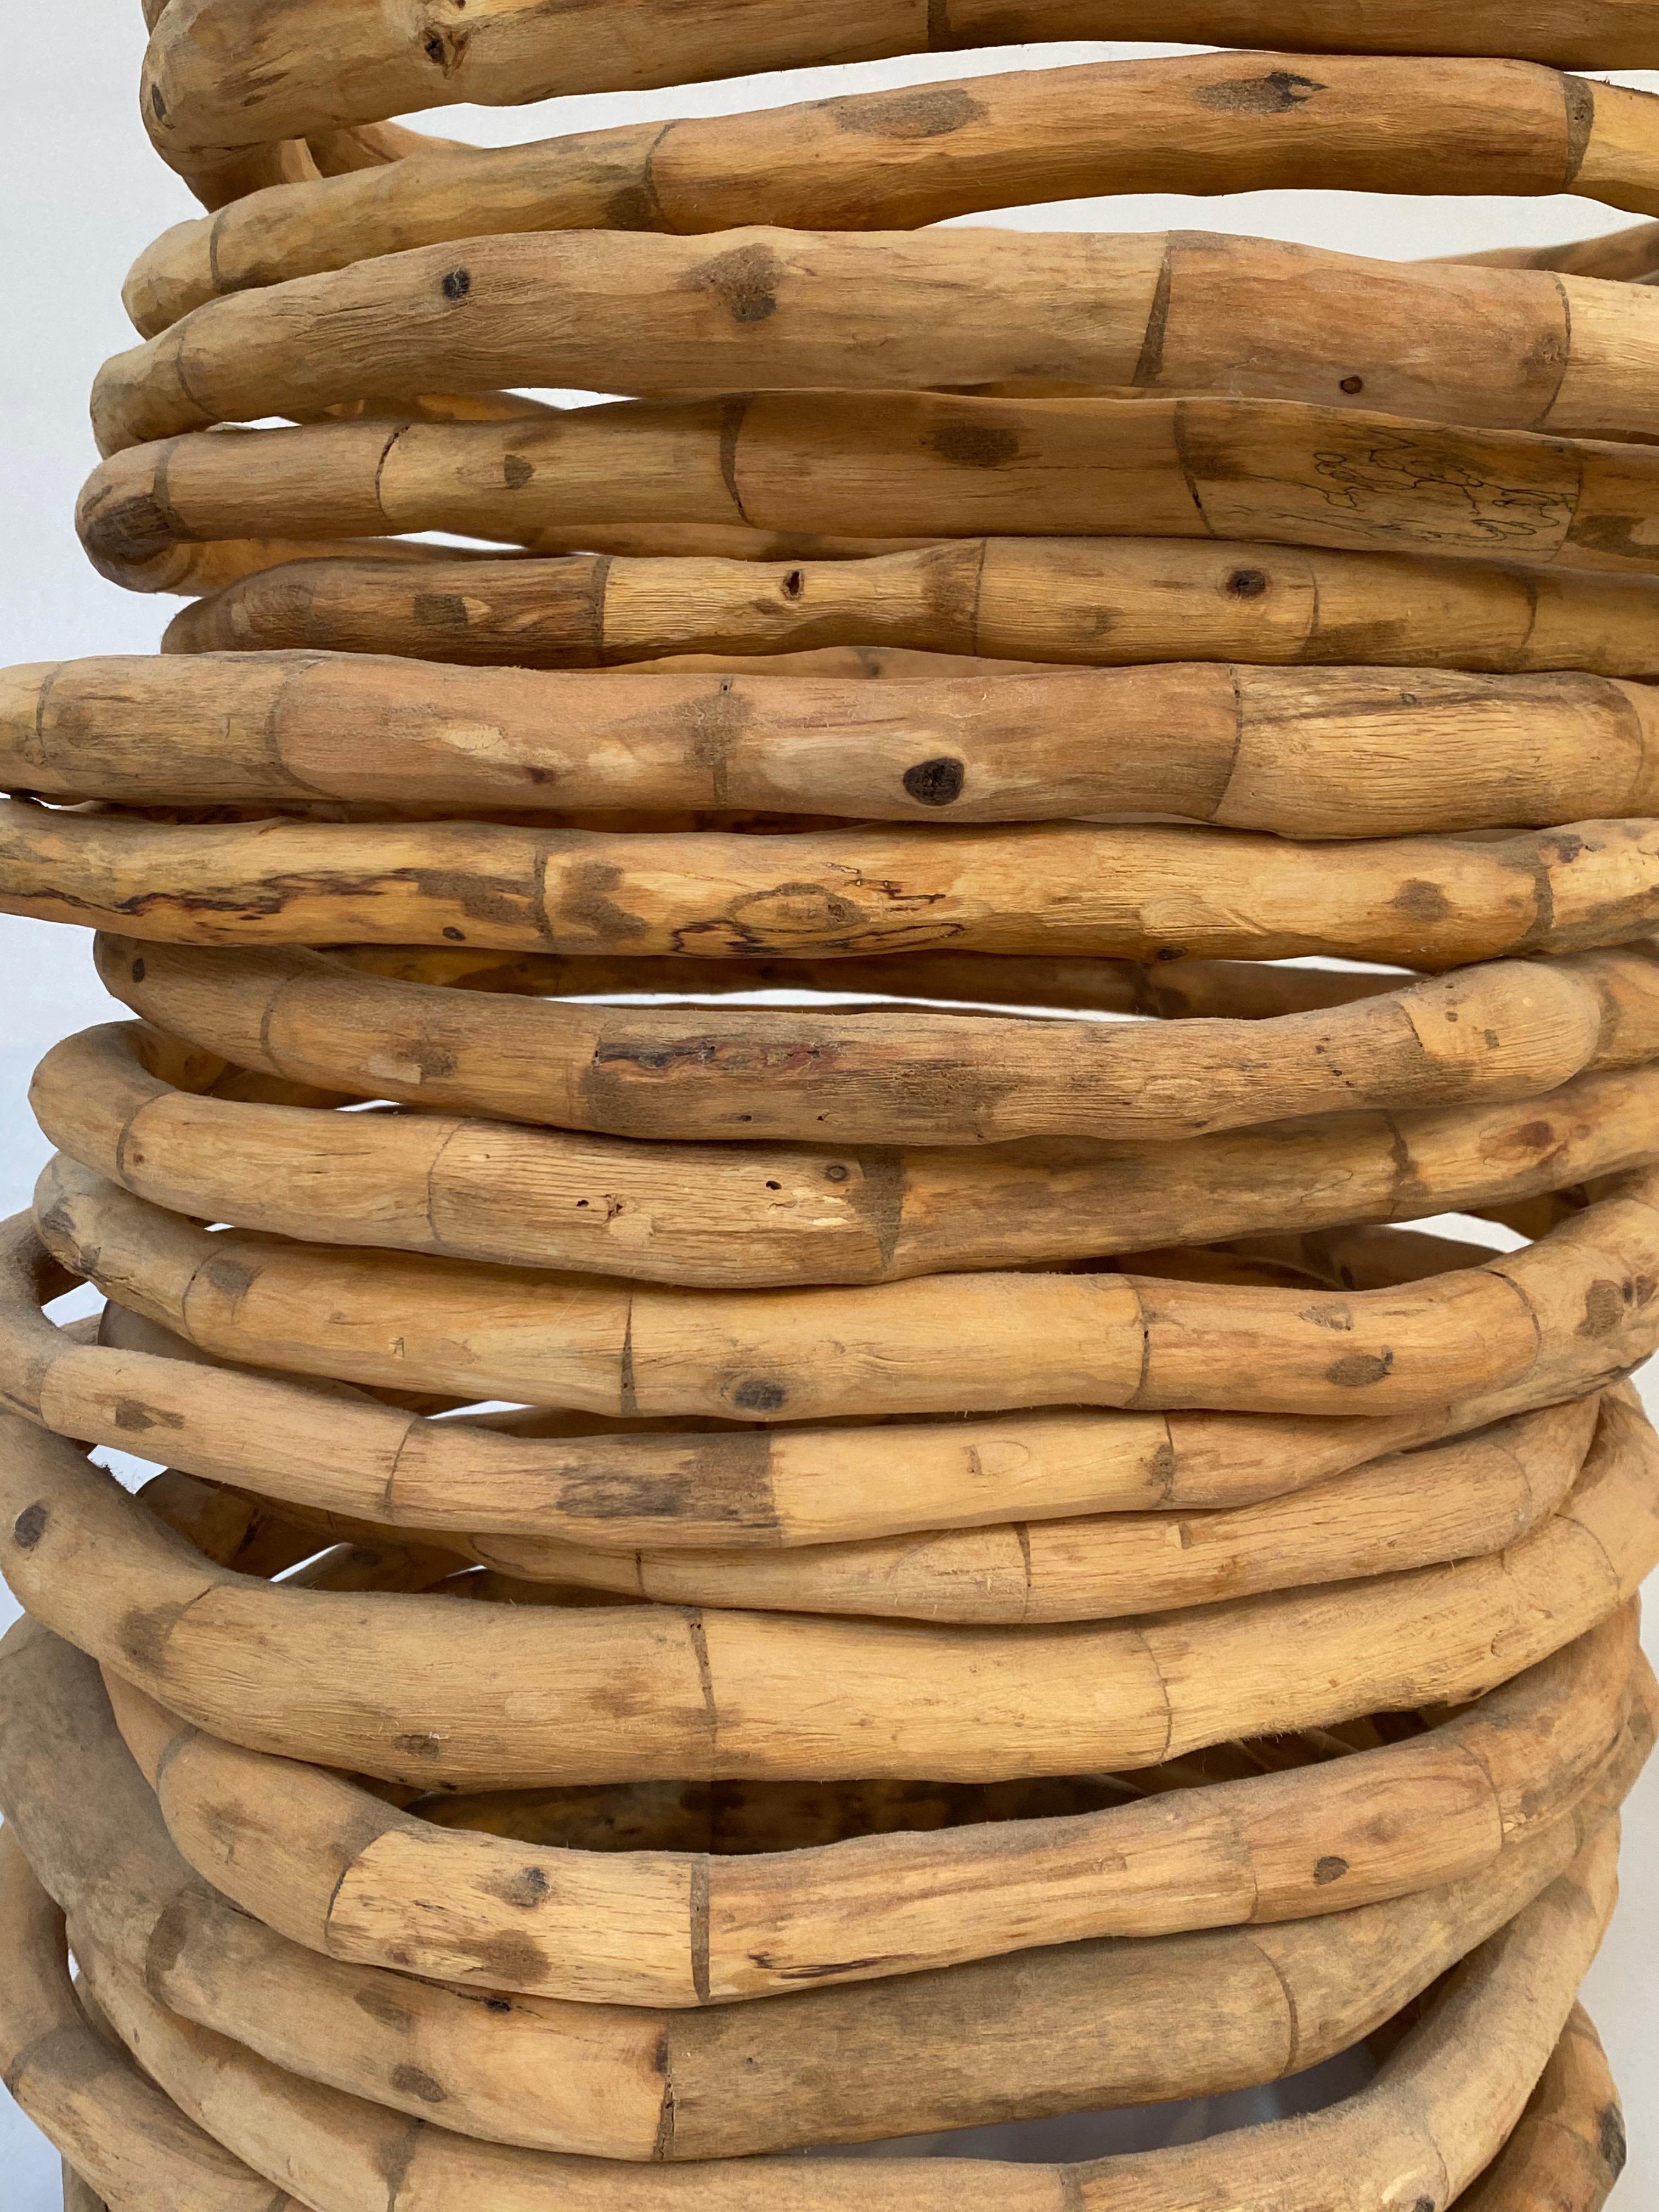 Wood Sculpture, 336 pieces, 21 rings/circles : 'Chlorophyll' - Brown Abstract Sculpture by Loren Eiferman